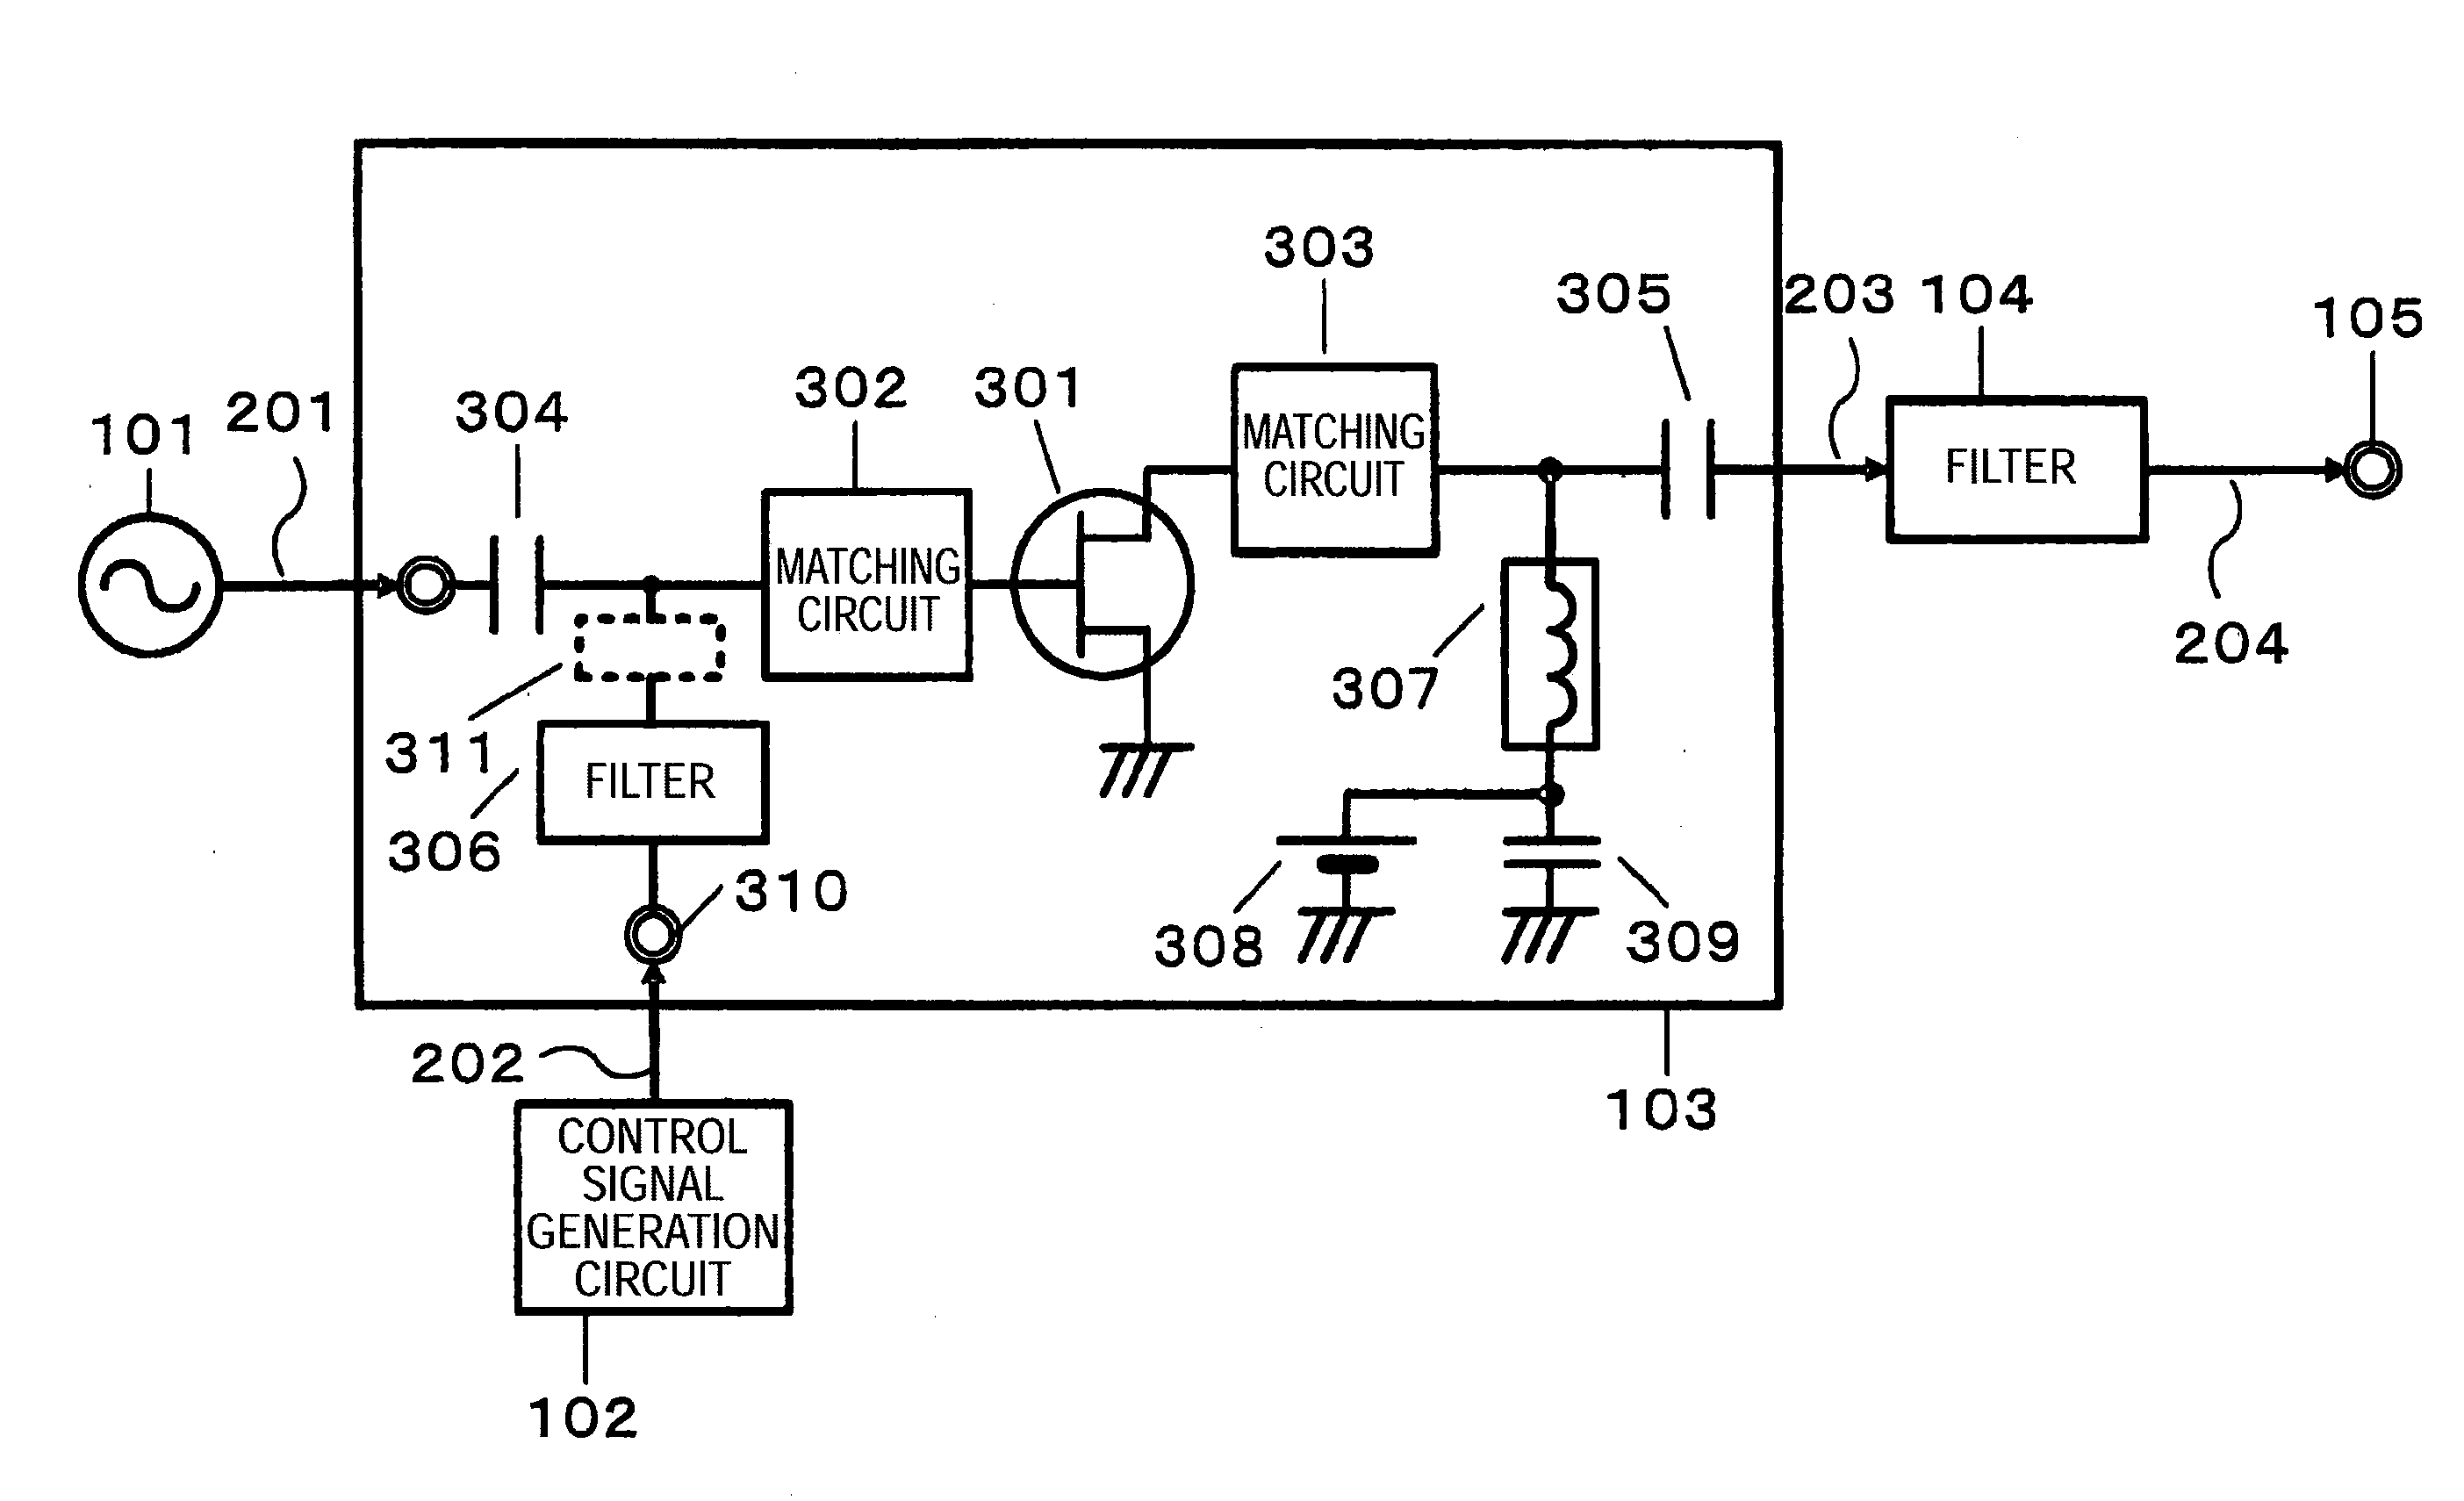 Pulse generation circuit and modulator